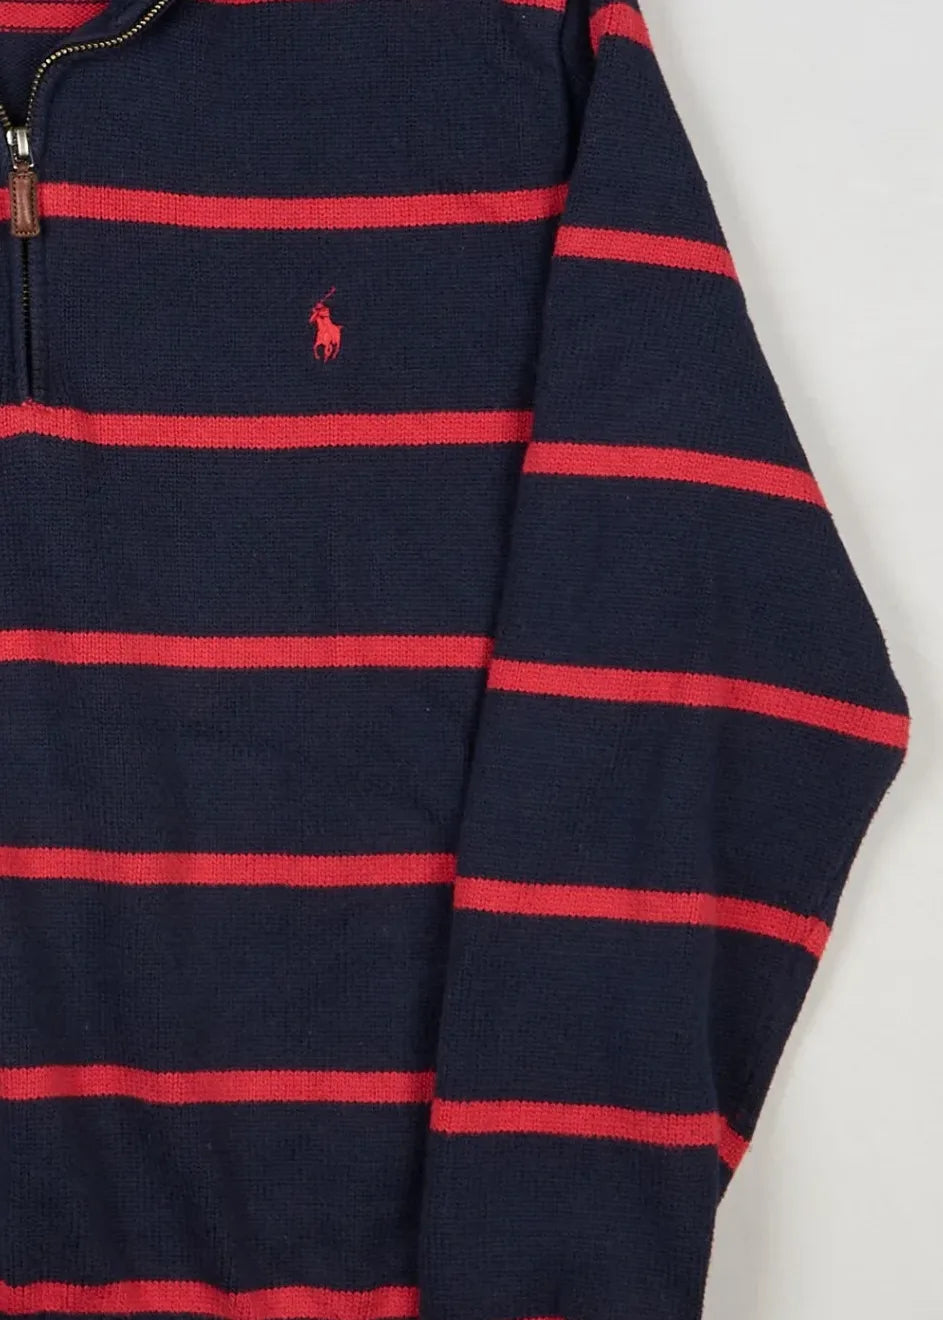 Ralph Lauren - Sweater (M) Right